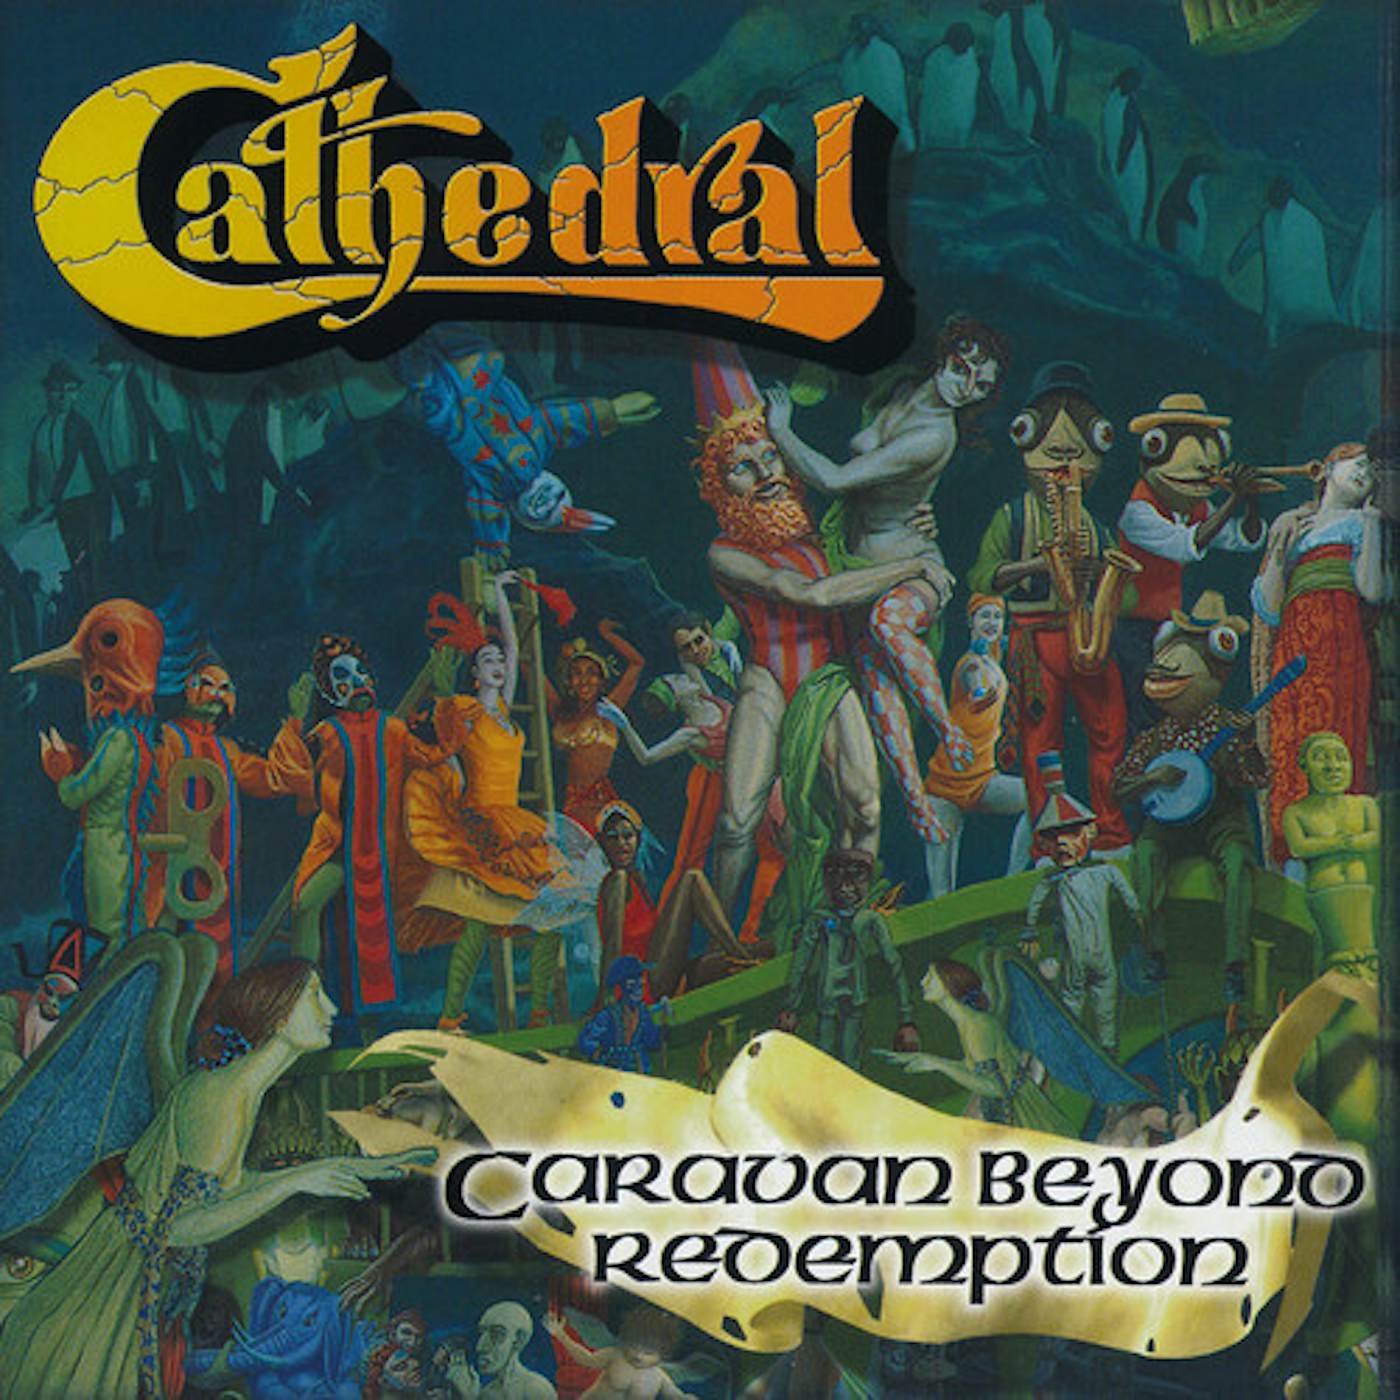 Cathedral CARAVAN BEYOND REDEMPTION CD